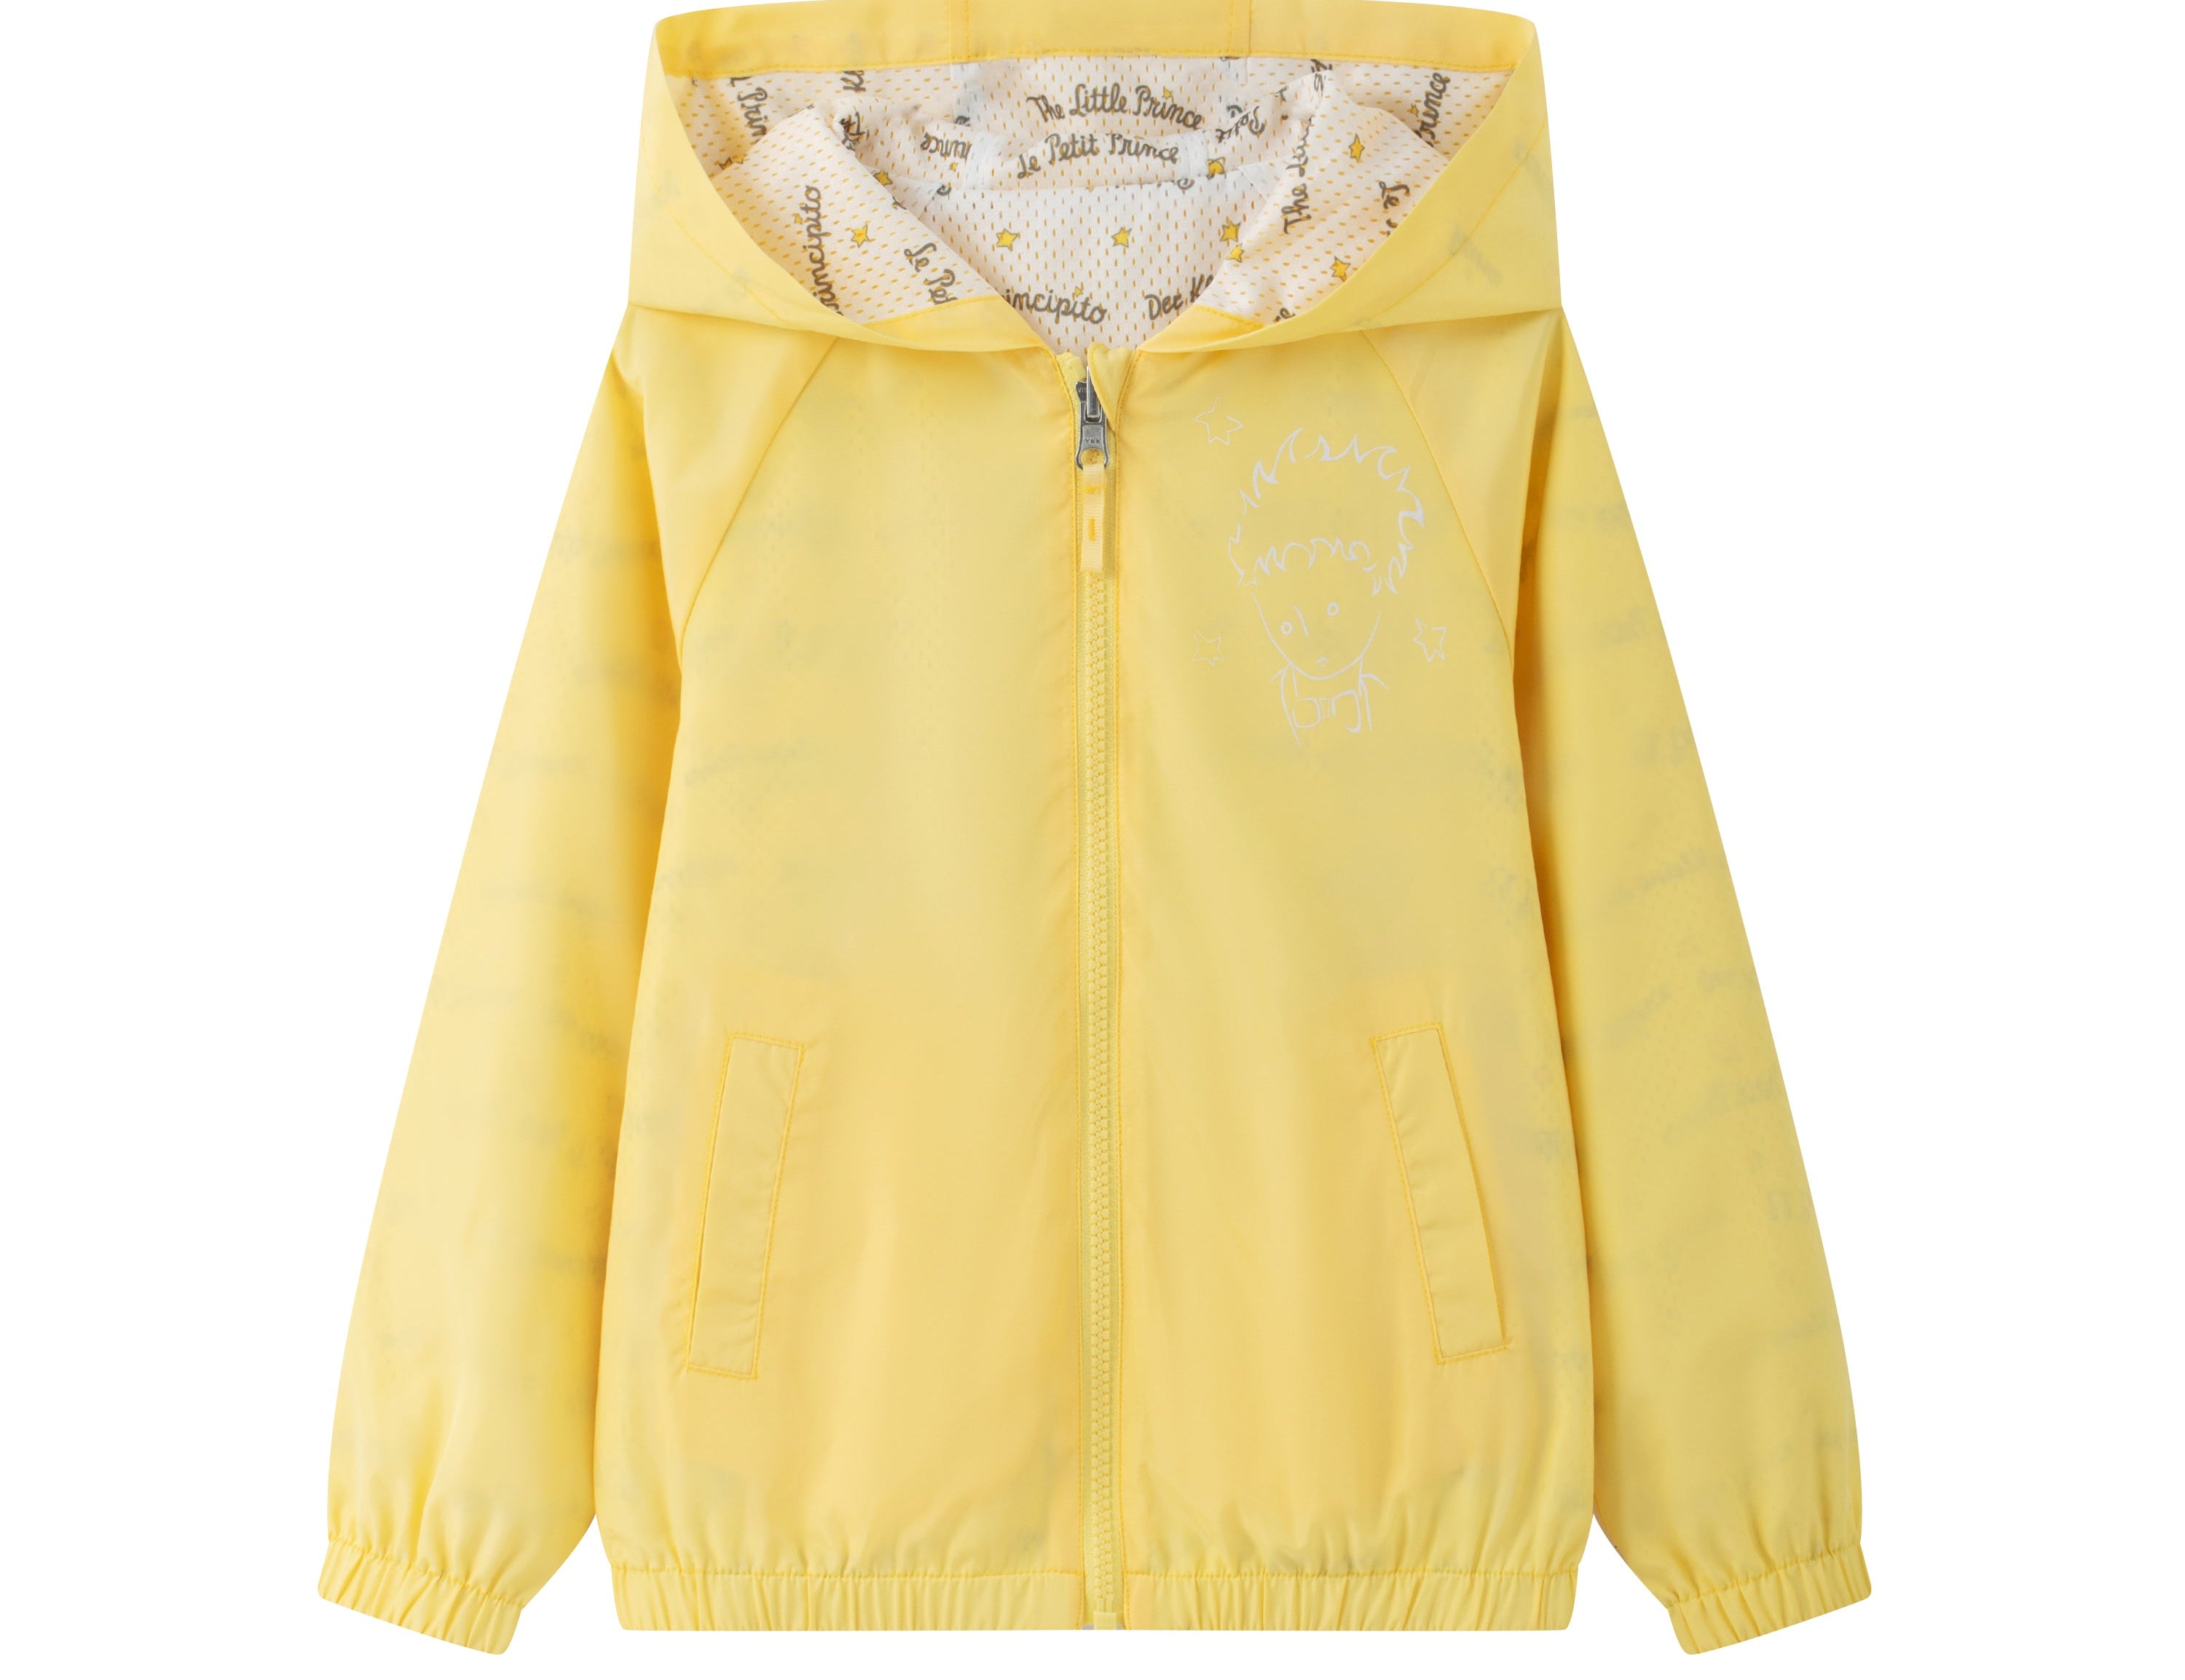 Vauva x Le Petit Prince - Kids Reversible Jacket (Yellow) product image outside front